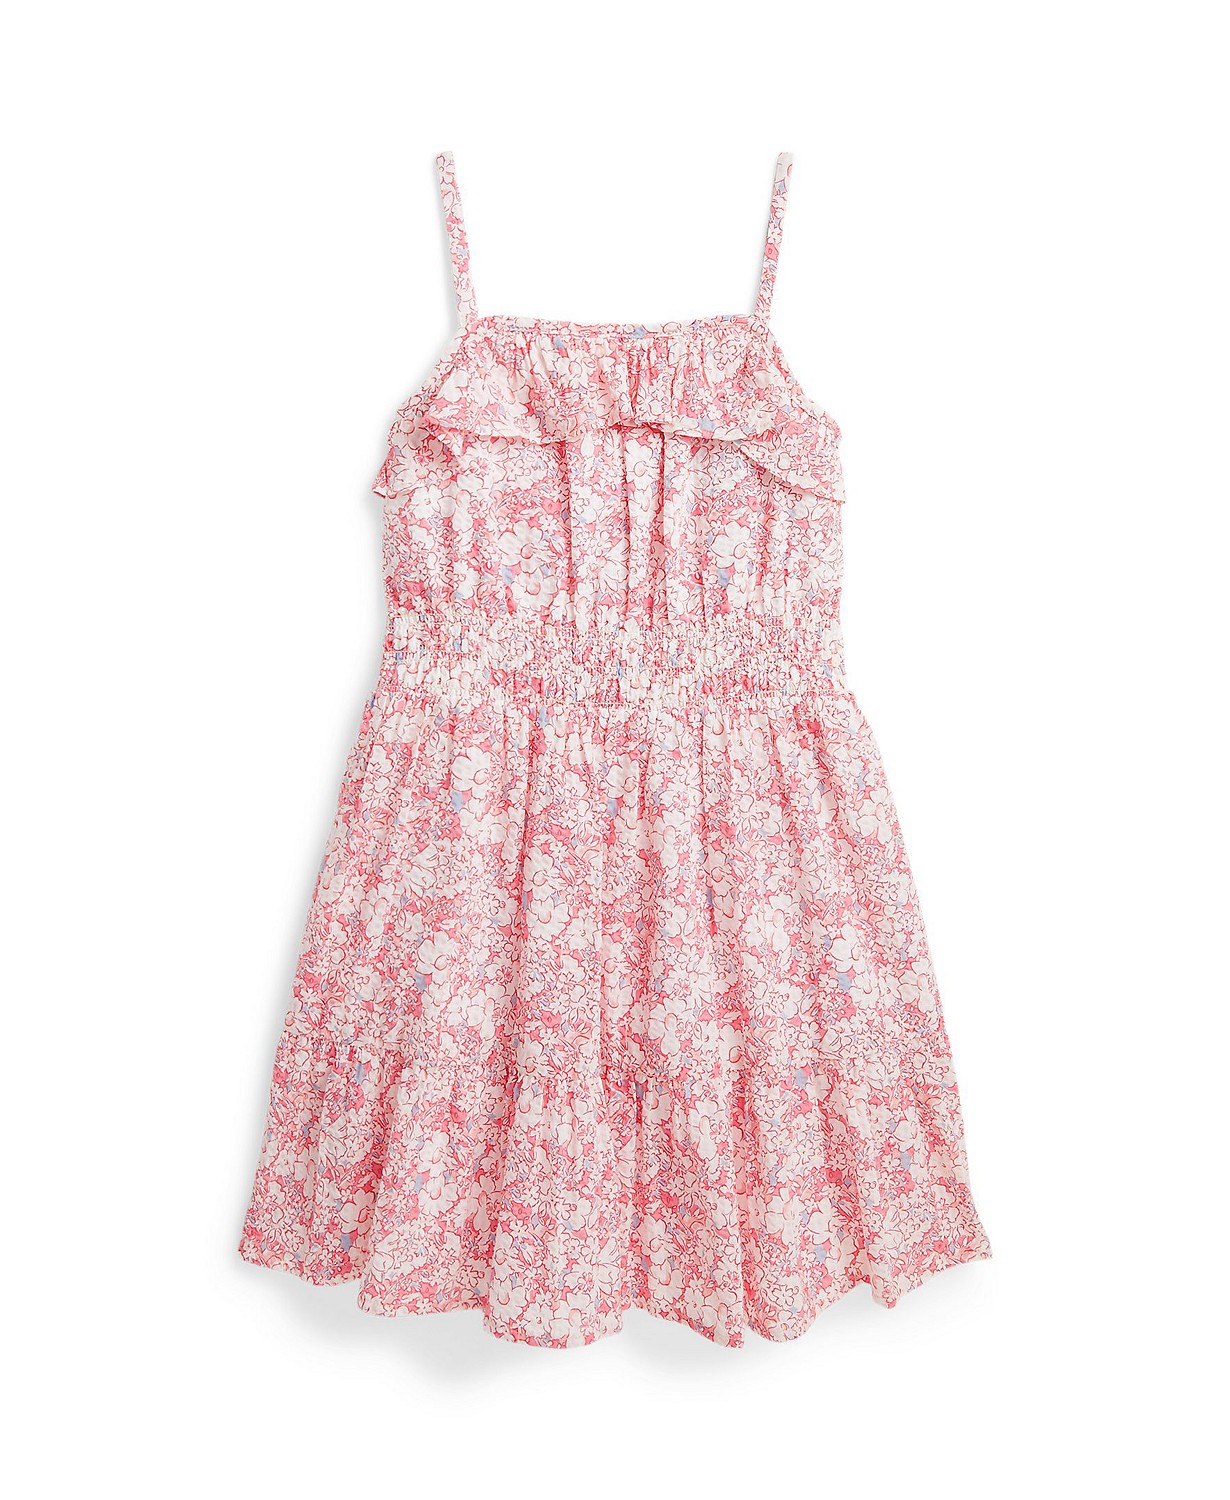 Toddler and Little Girls Floral Cotton Seersucker Dress